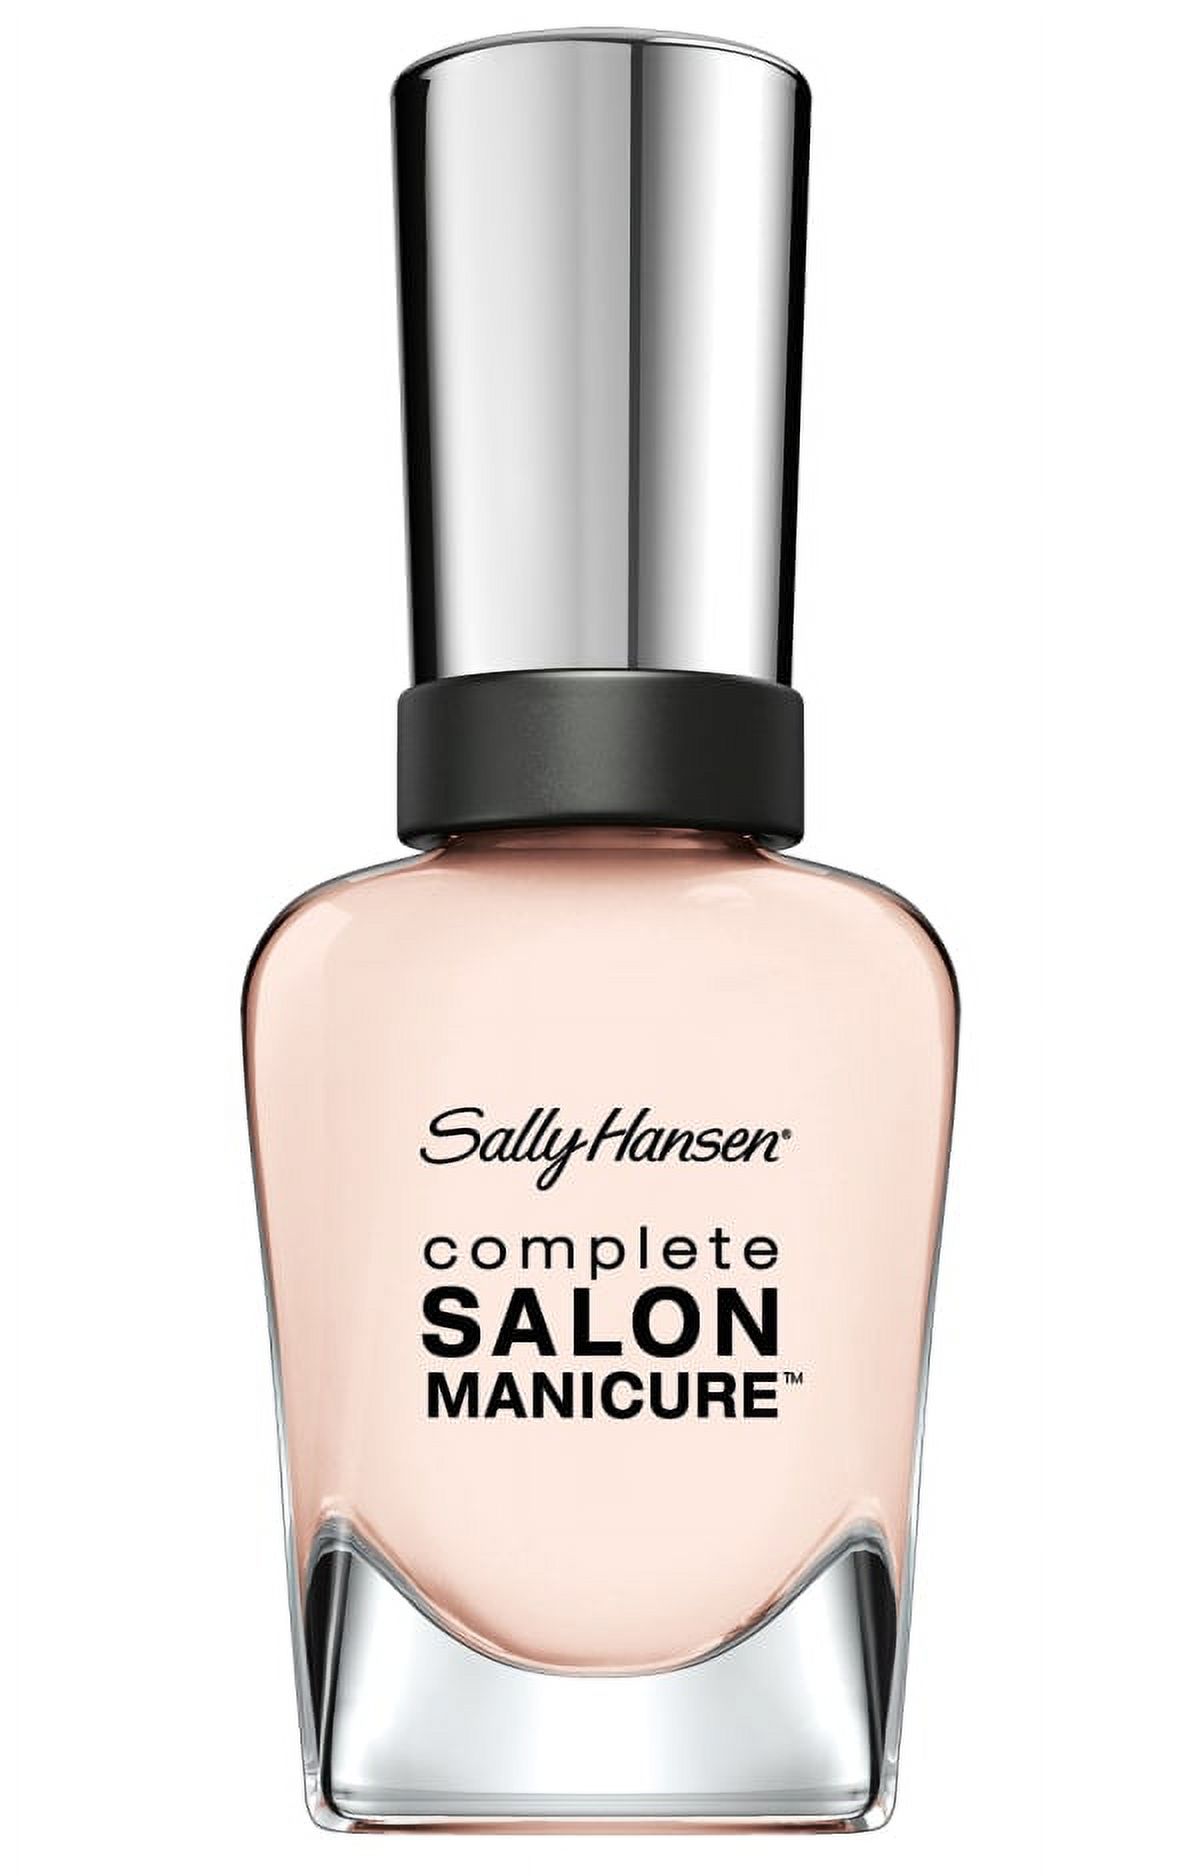 Sally Hansen Complete Salon Manicure Nail Polish, Sheer Ecstasy - image 1 of 3